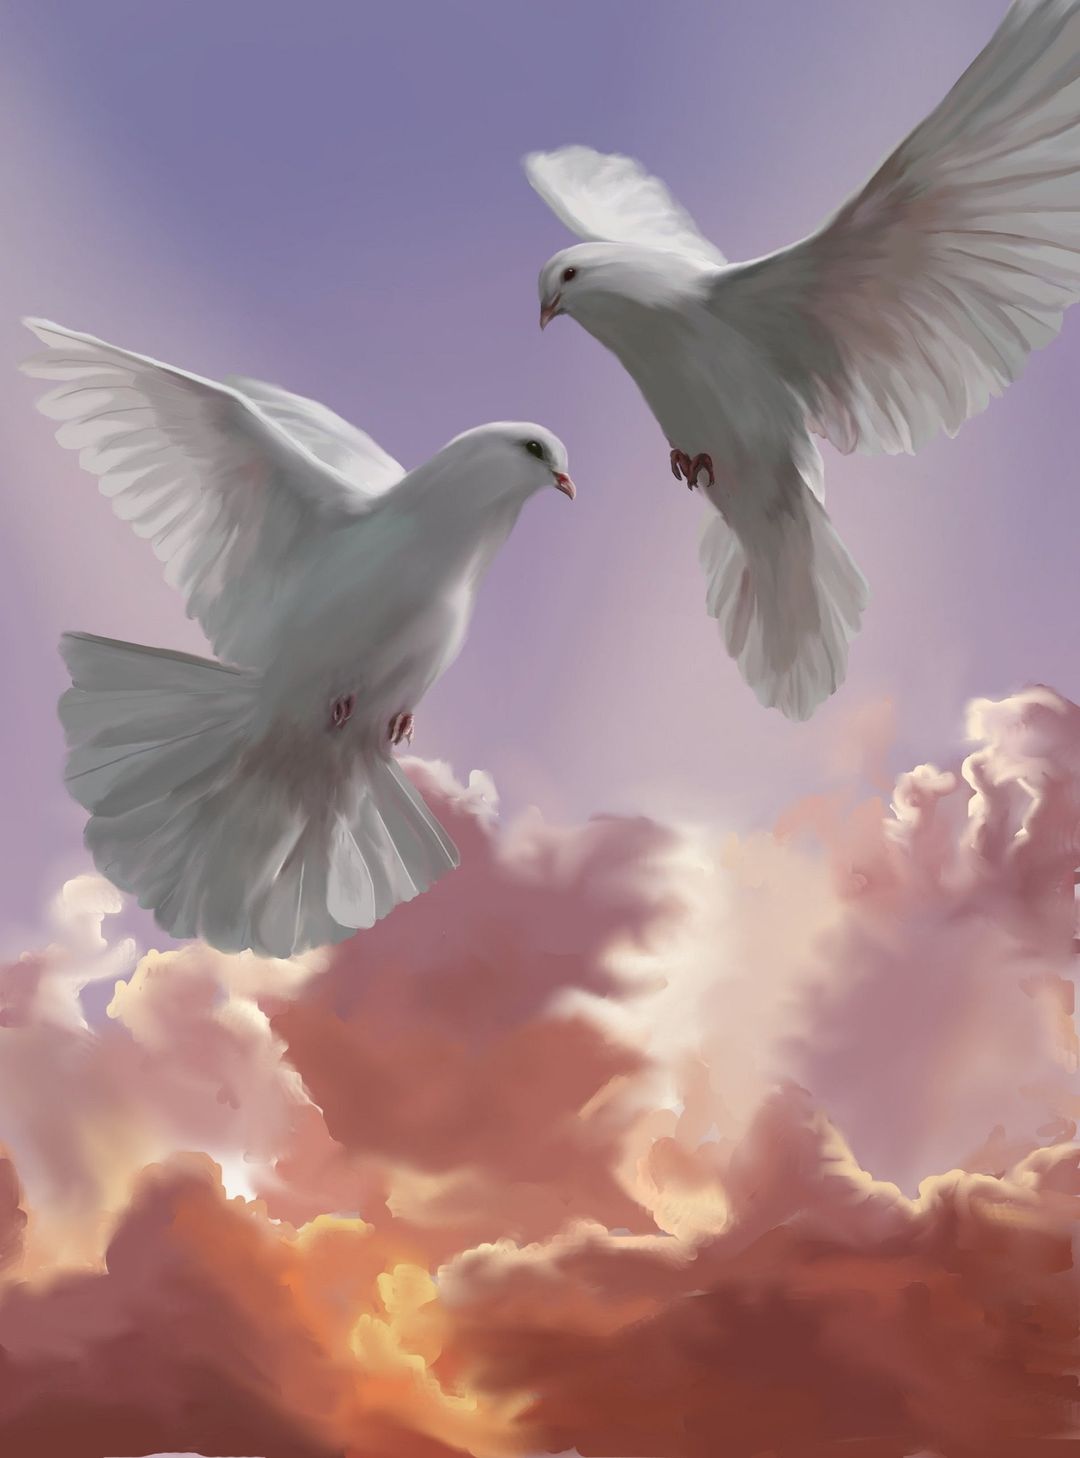 colombes de la paix.jpg